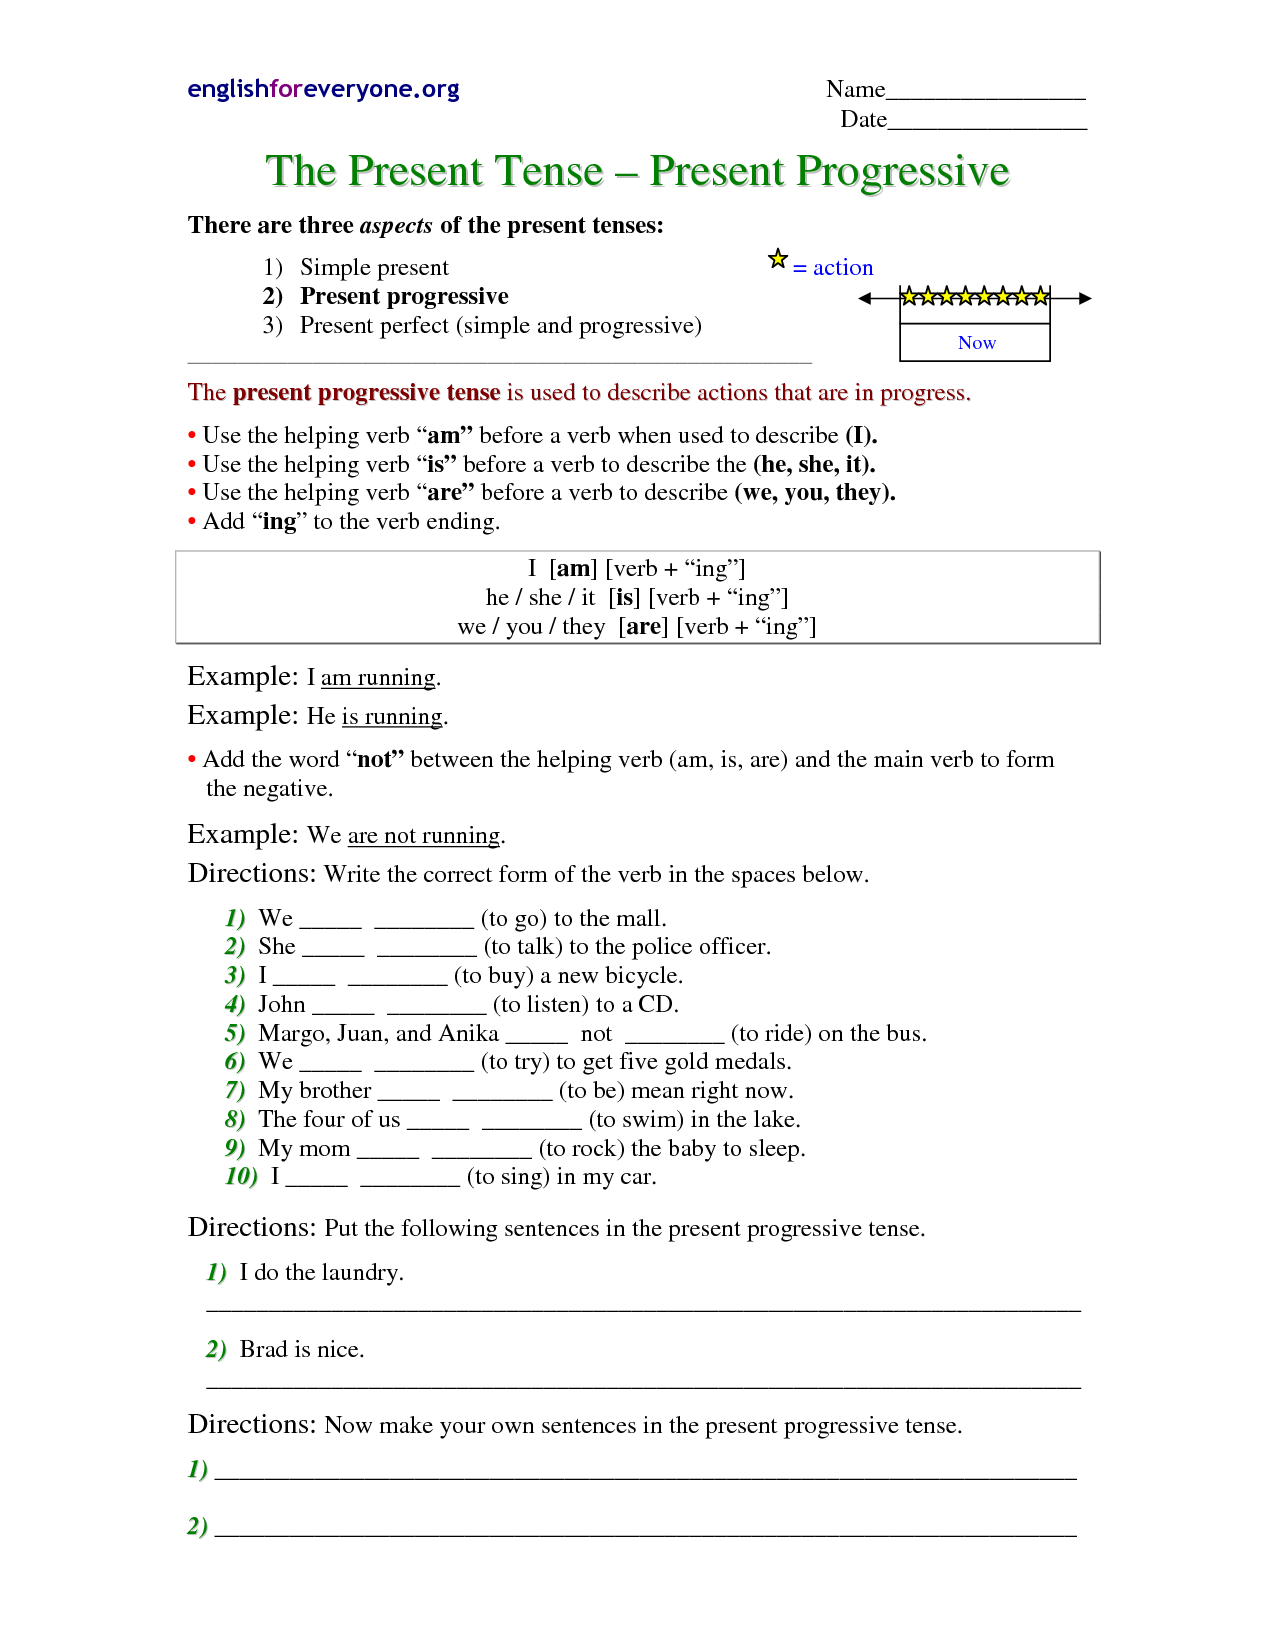 present-progressive-worksheets-printable-lexia-s-blog